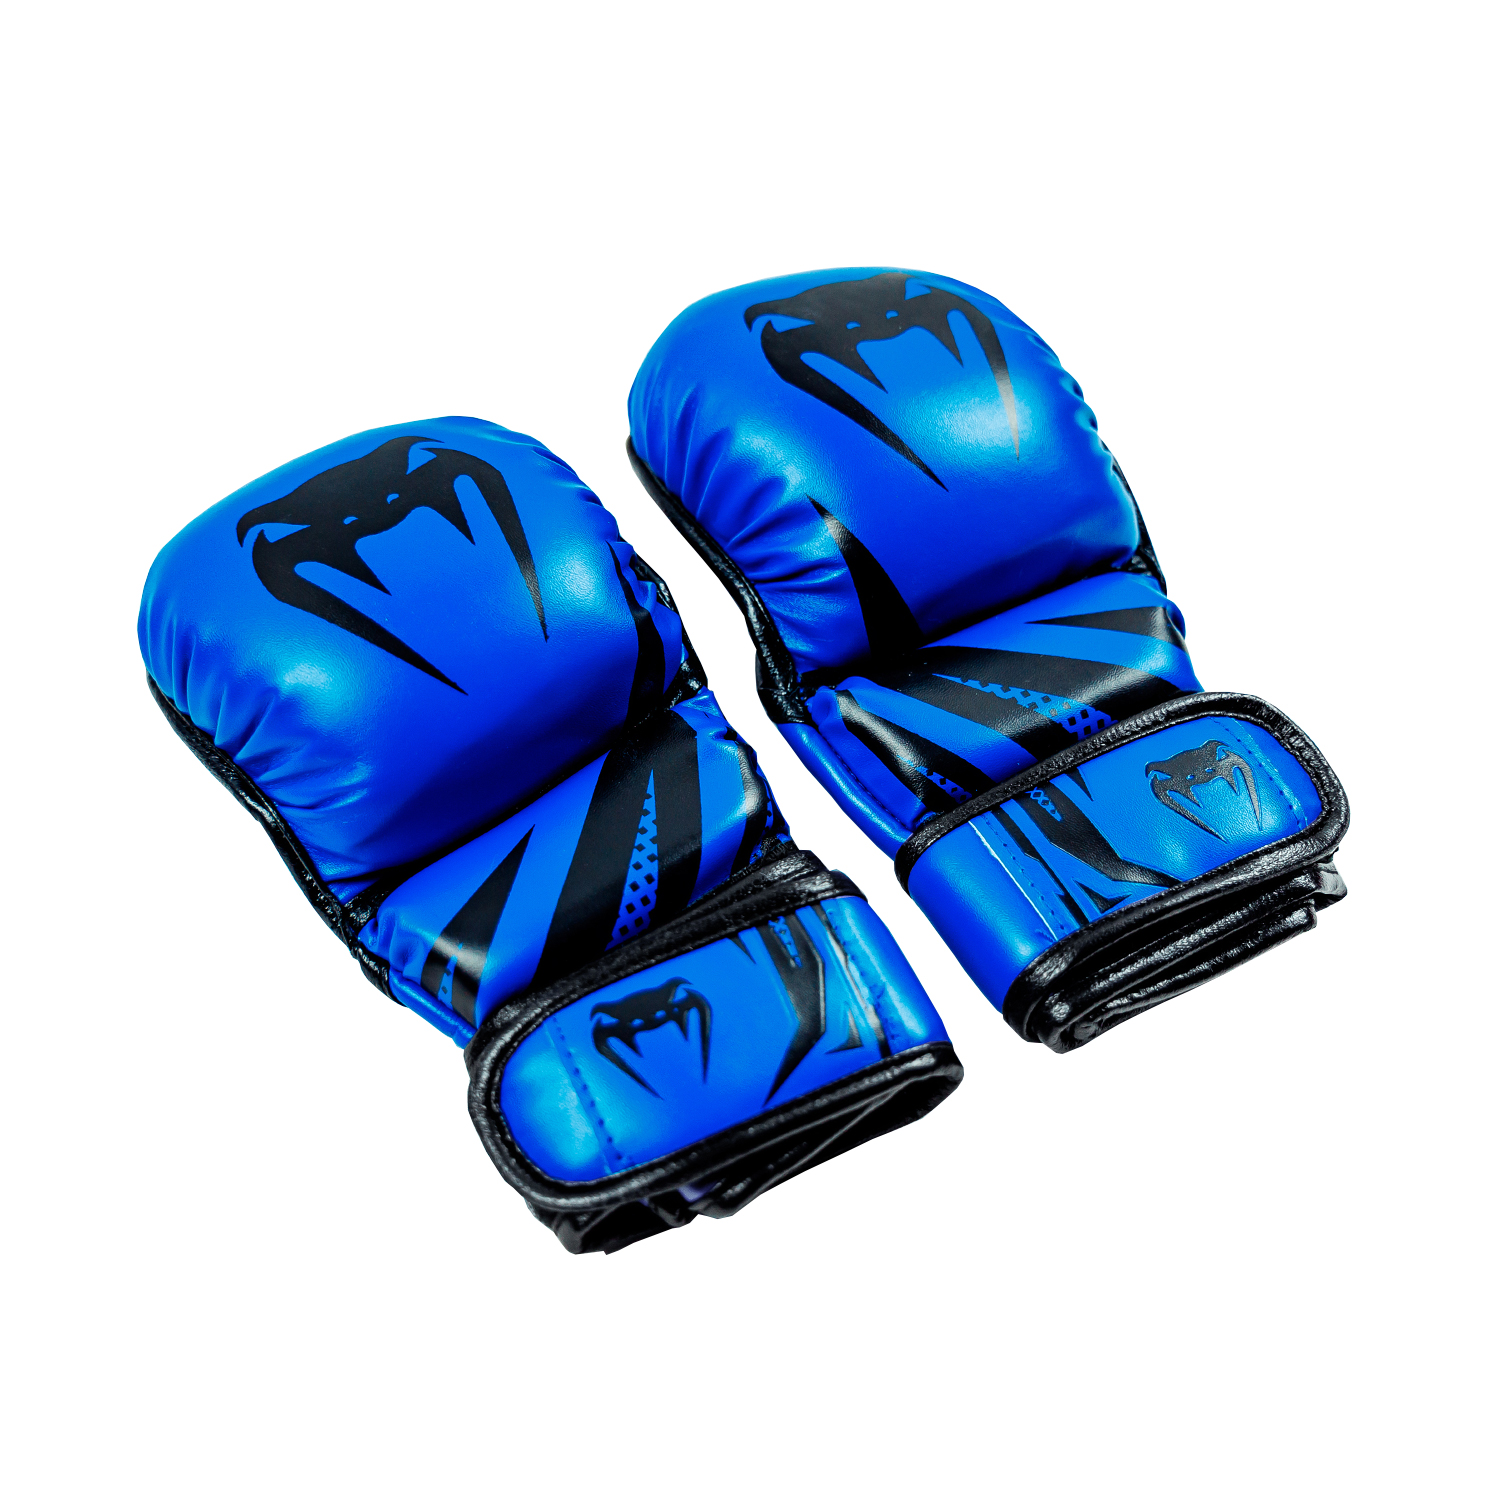 Боксерские перчатки "Venum" 3.0